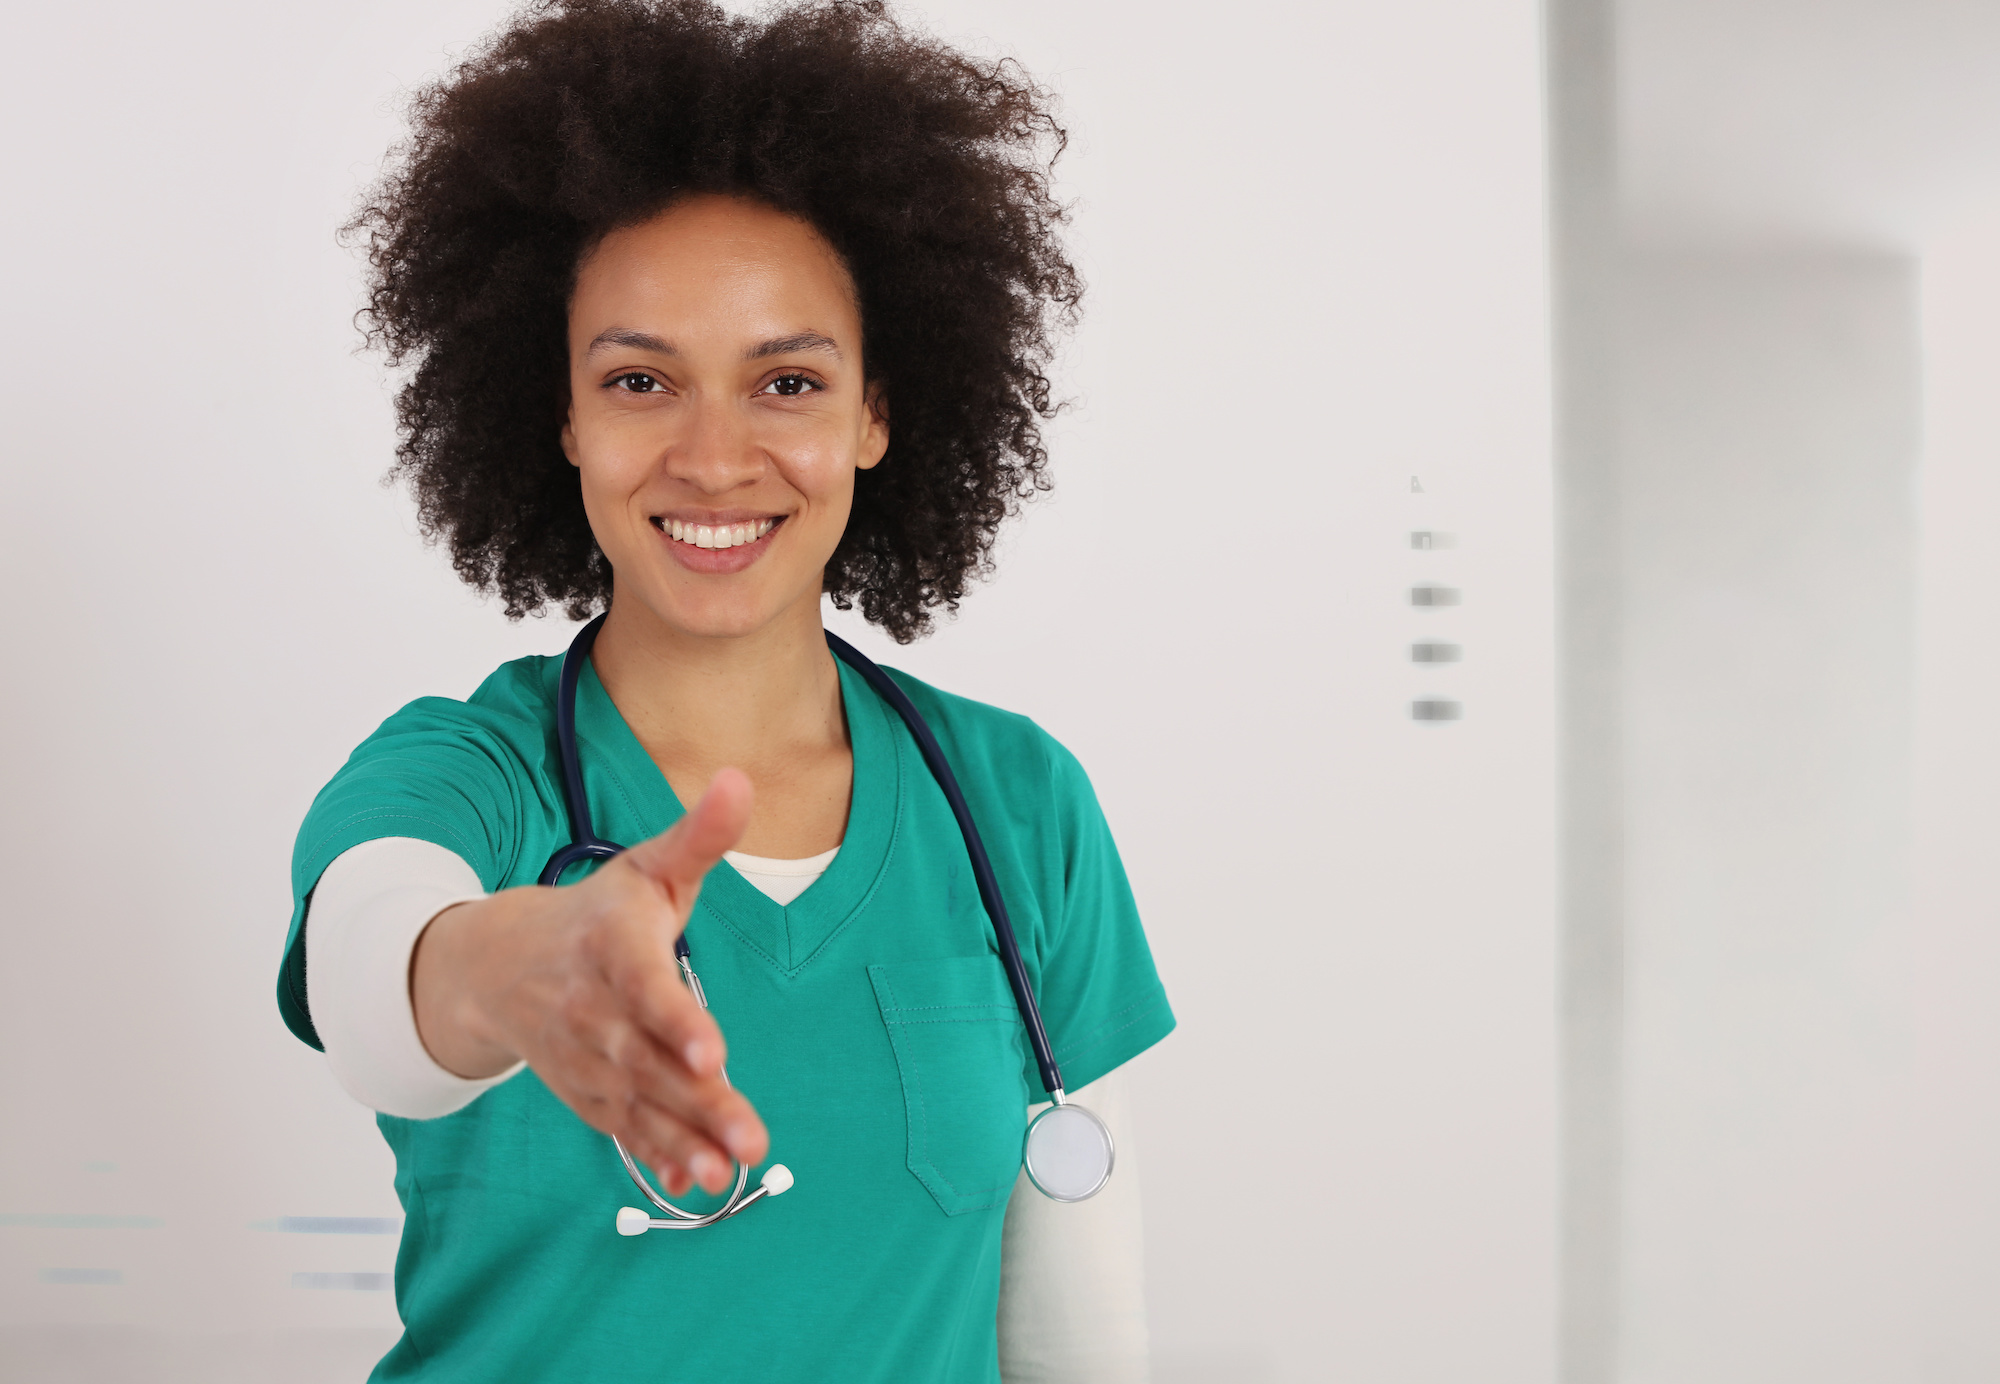 Nurse extending hand to greet patients is part of medical branding | Vanguard Communications | Denver, CO | San Jose, CA | Jacksonville, FL